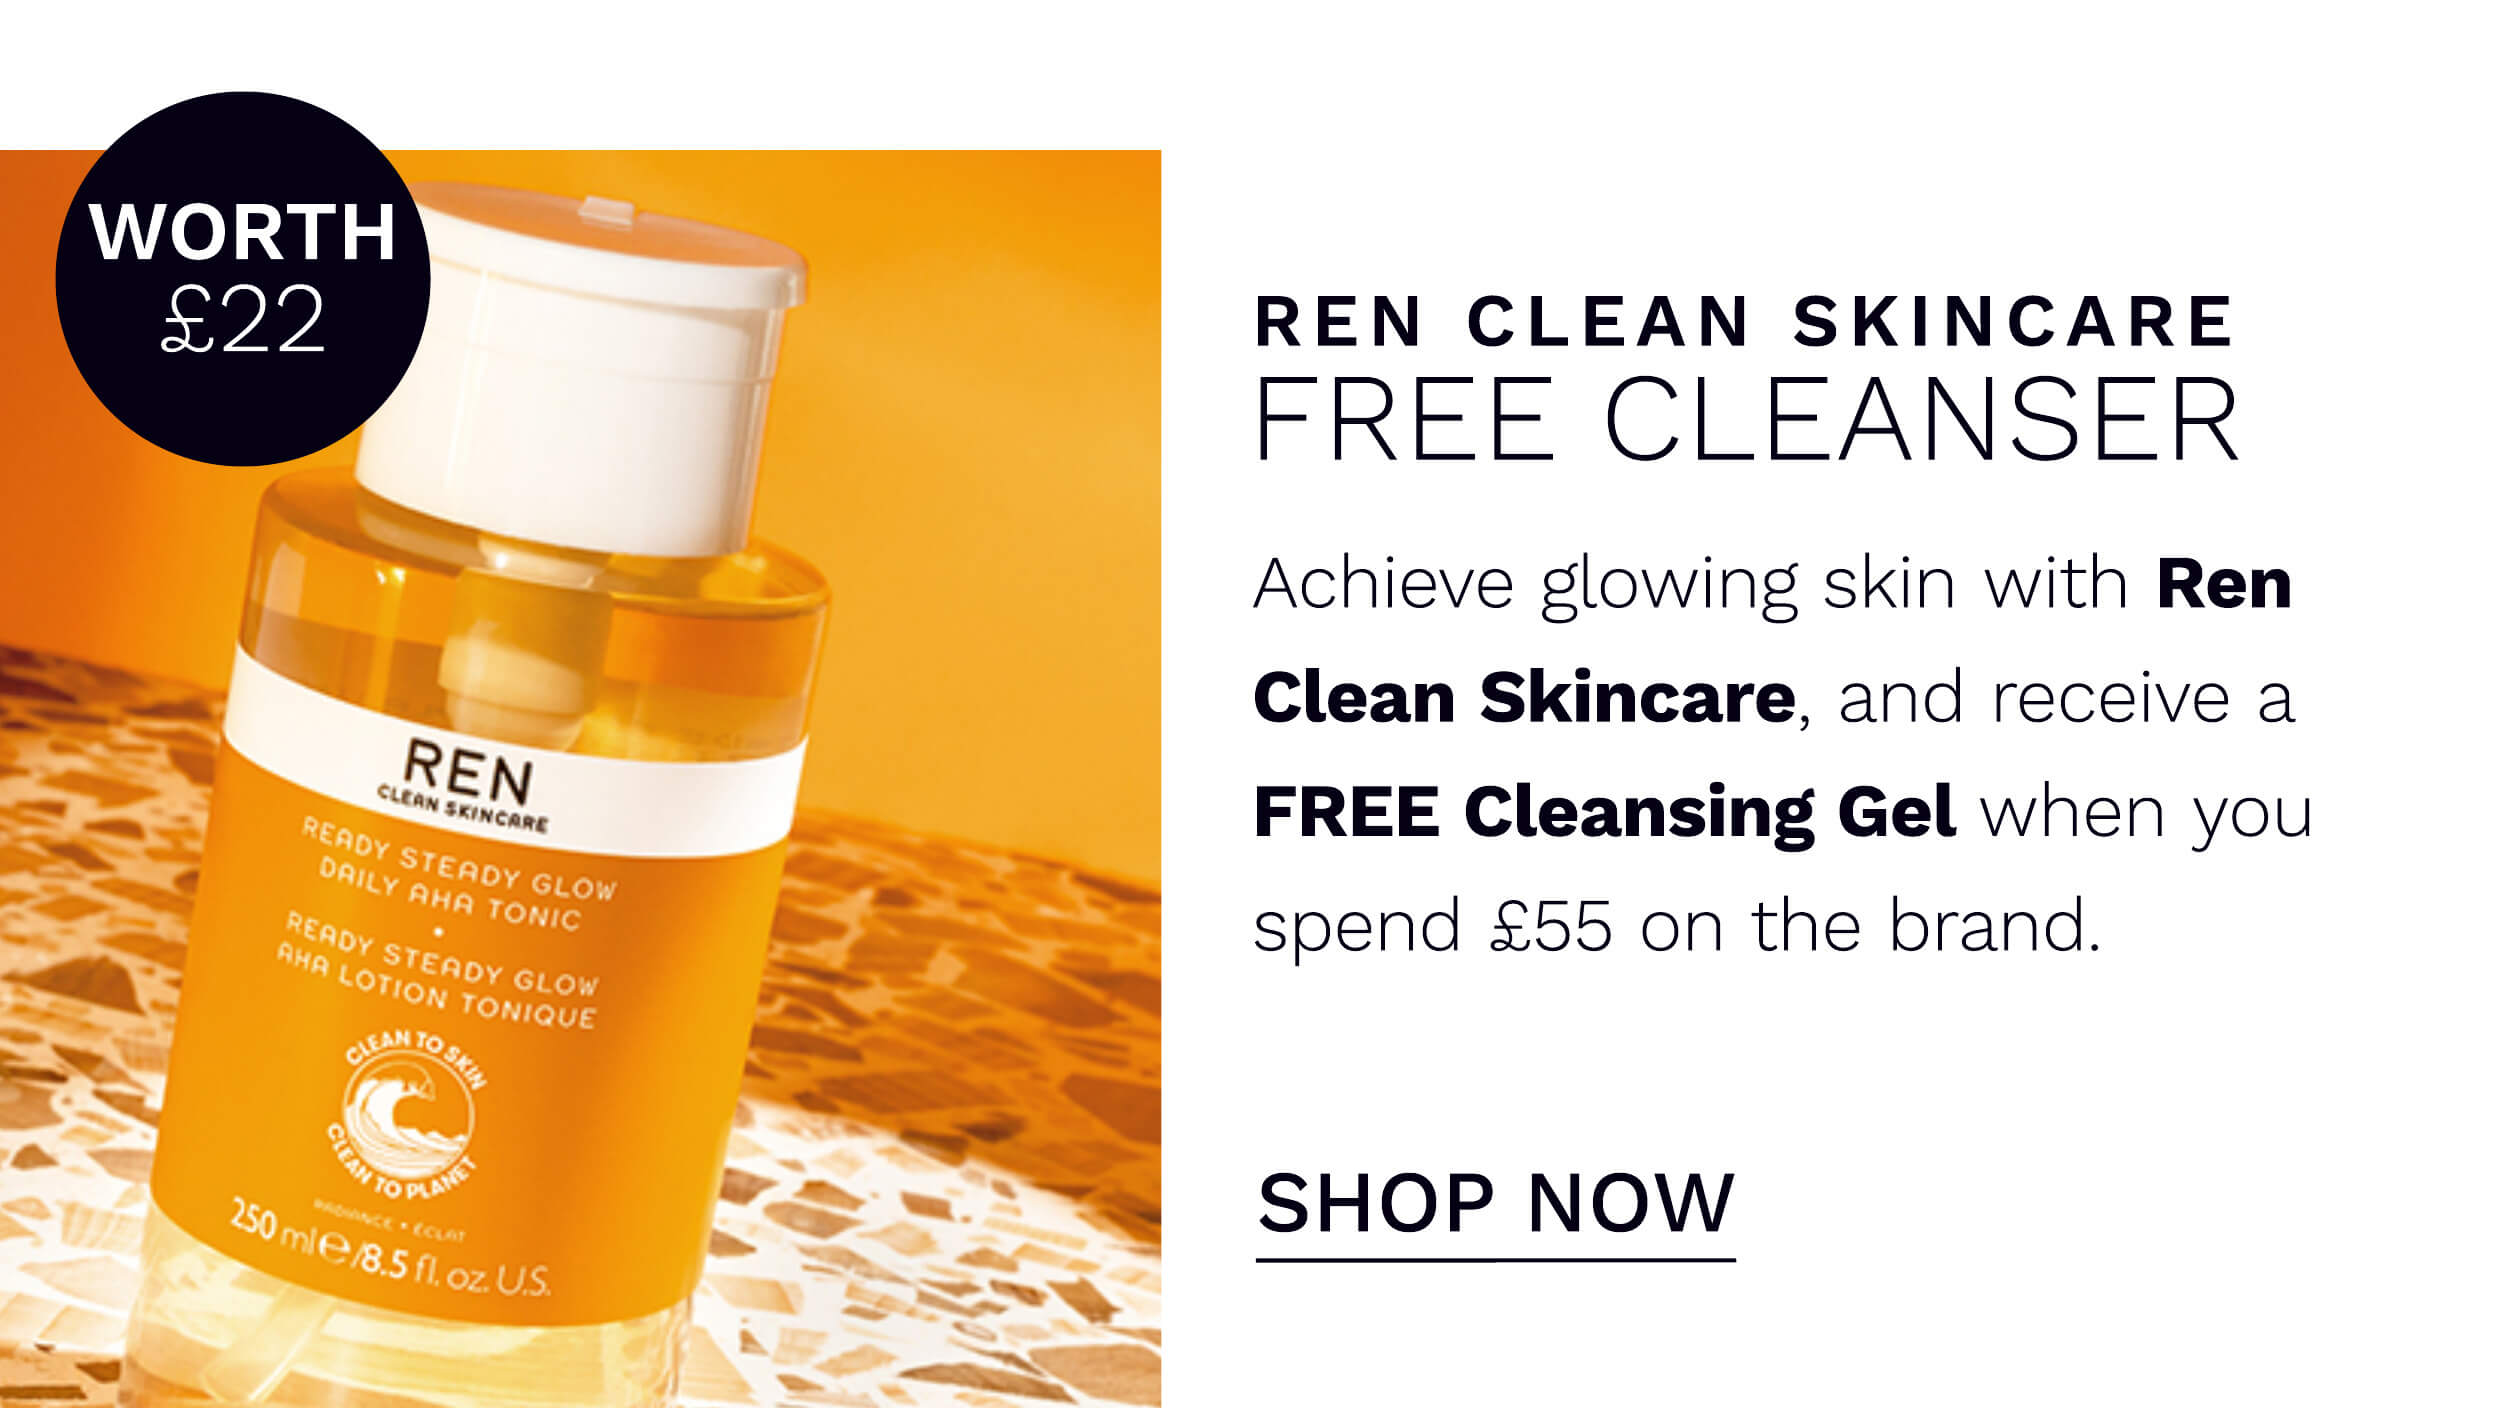 ren clean skincare